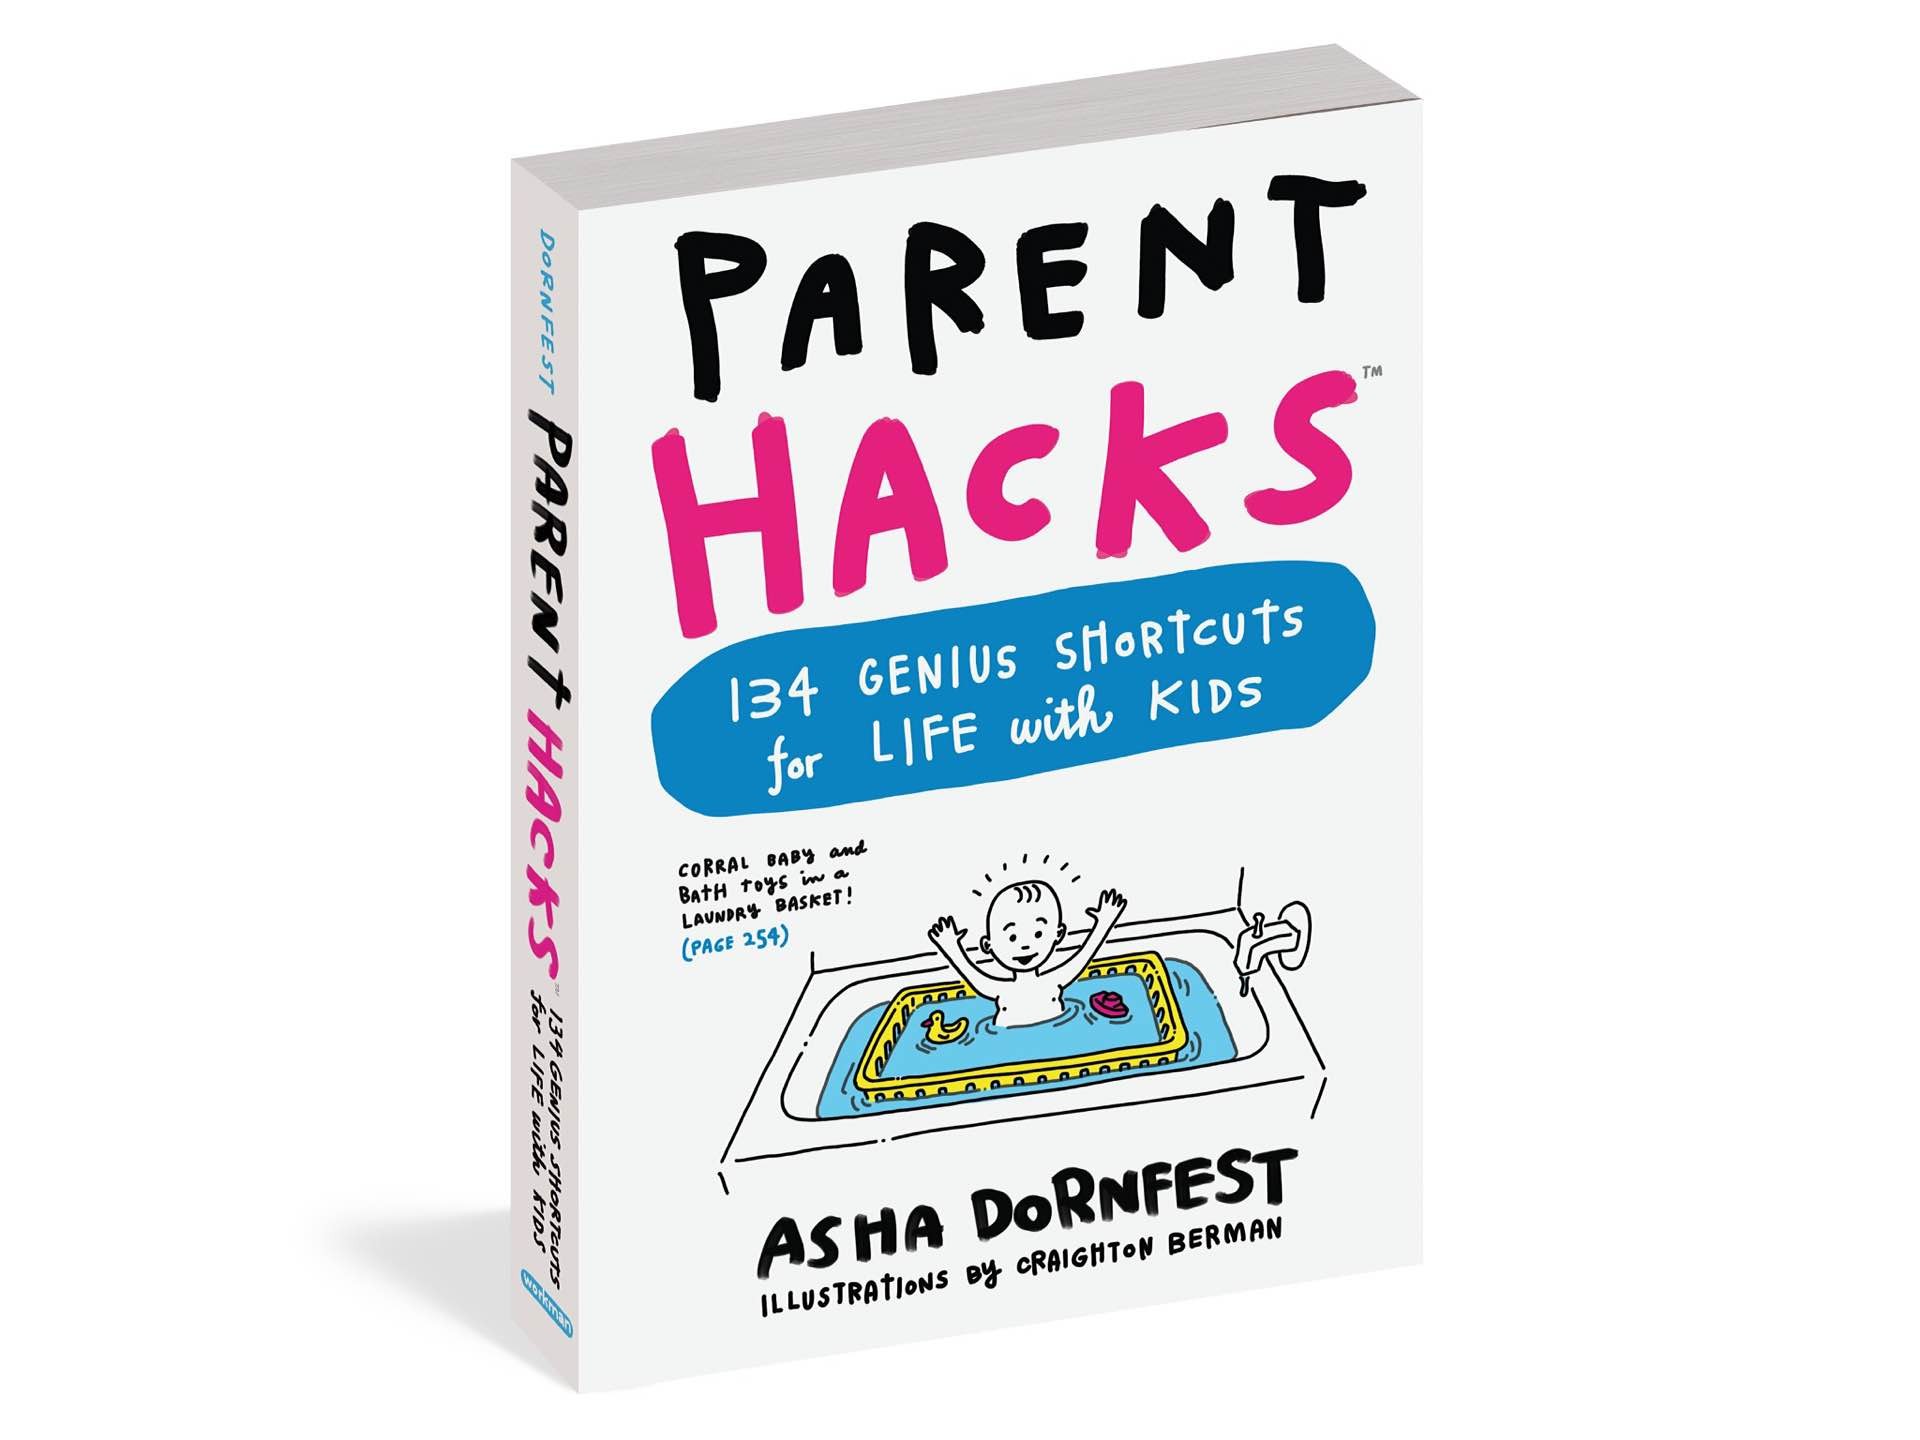 Parent Hacks by Asha Dornfest and Craighton Berman.